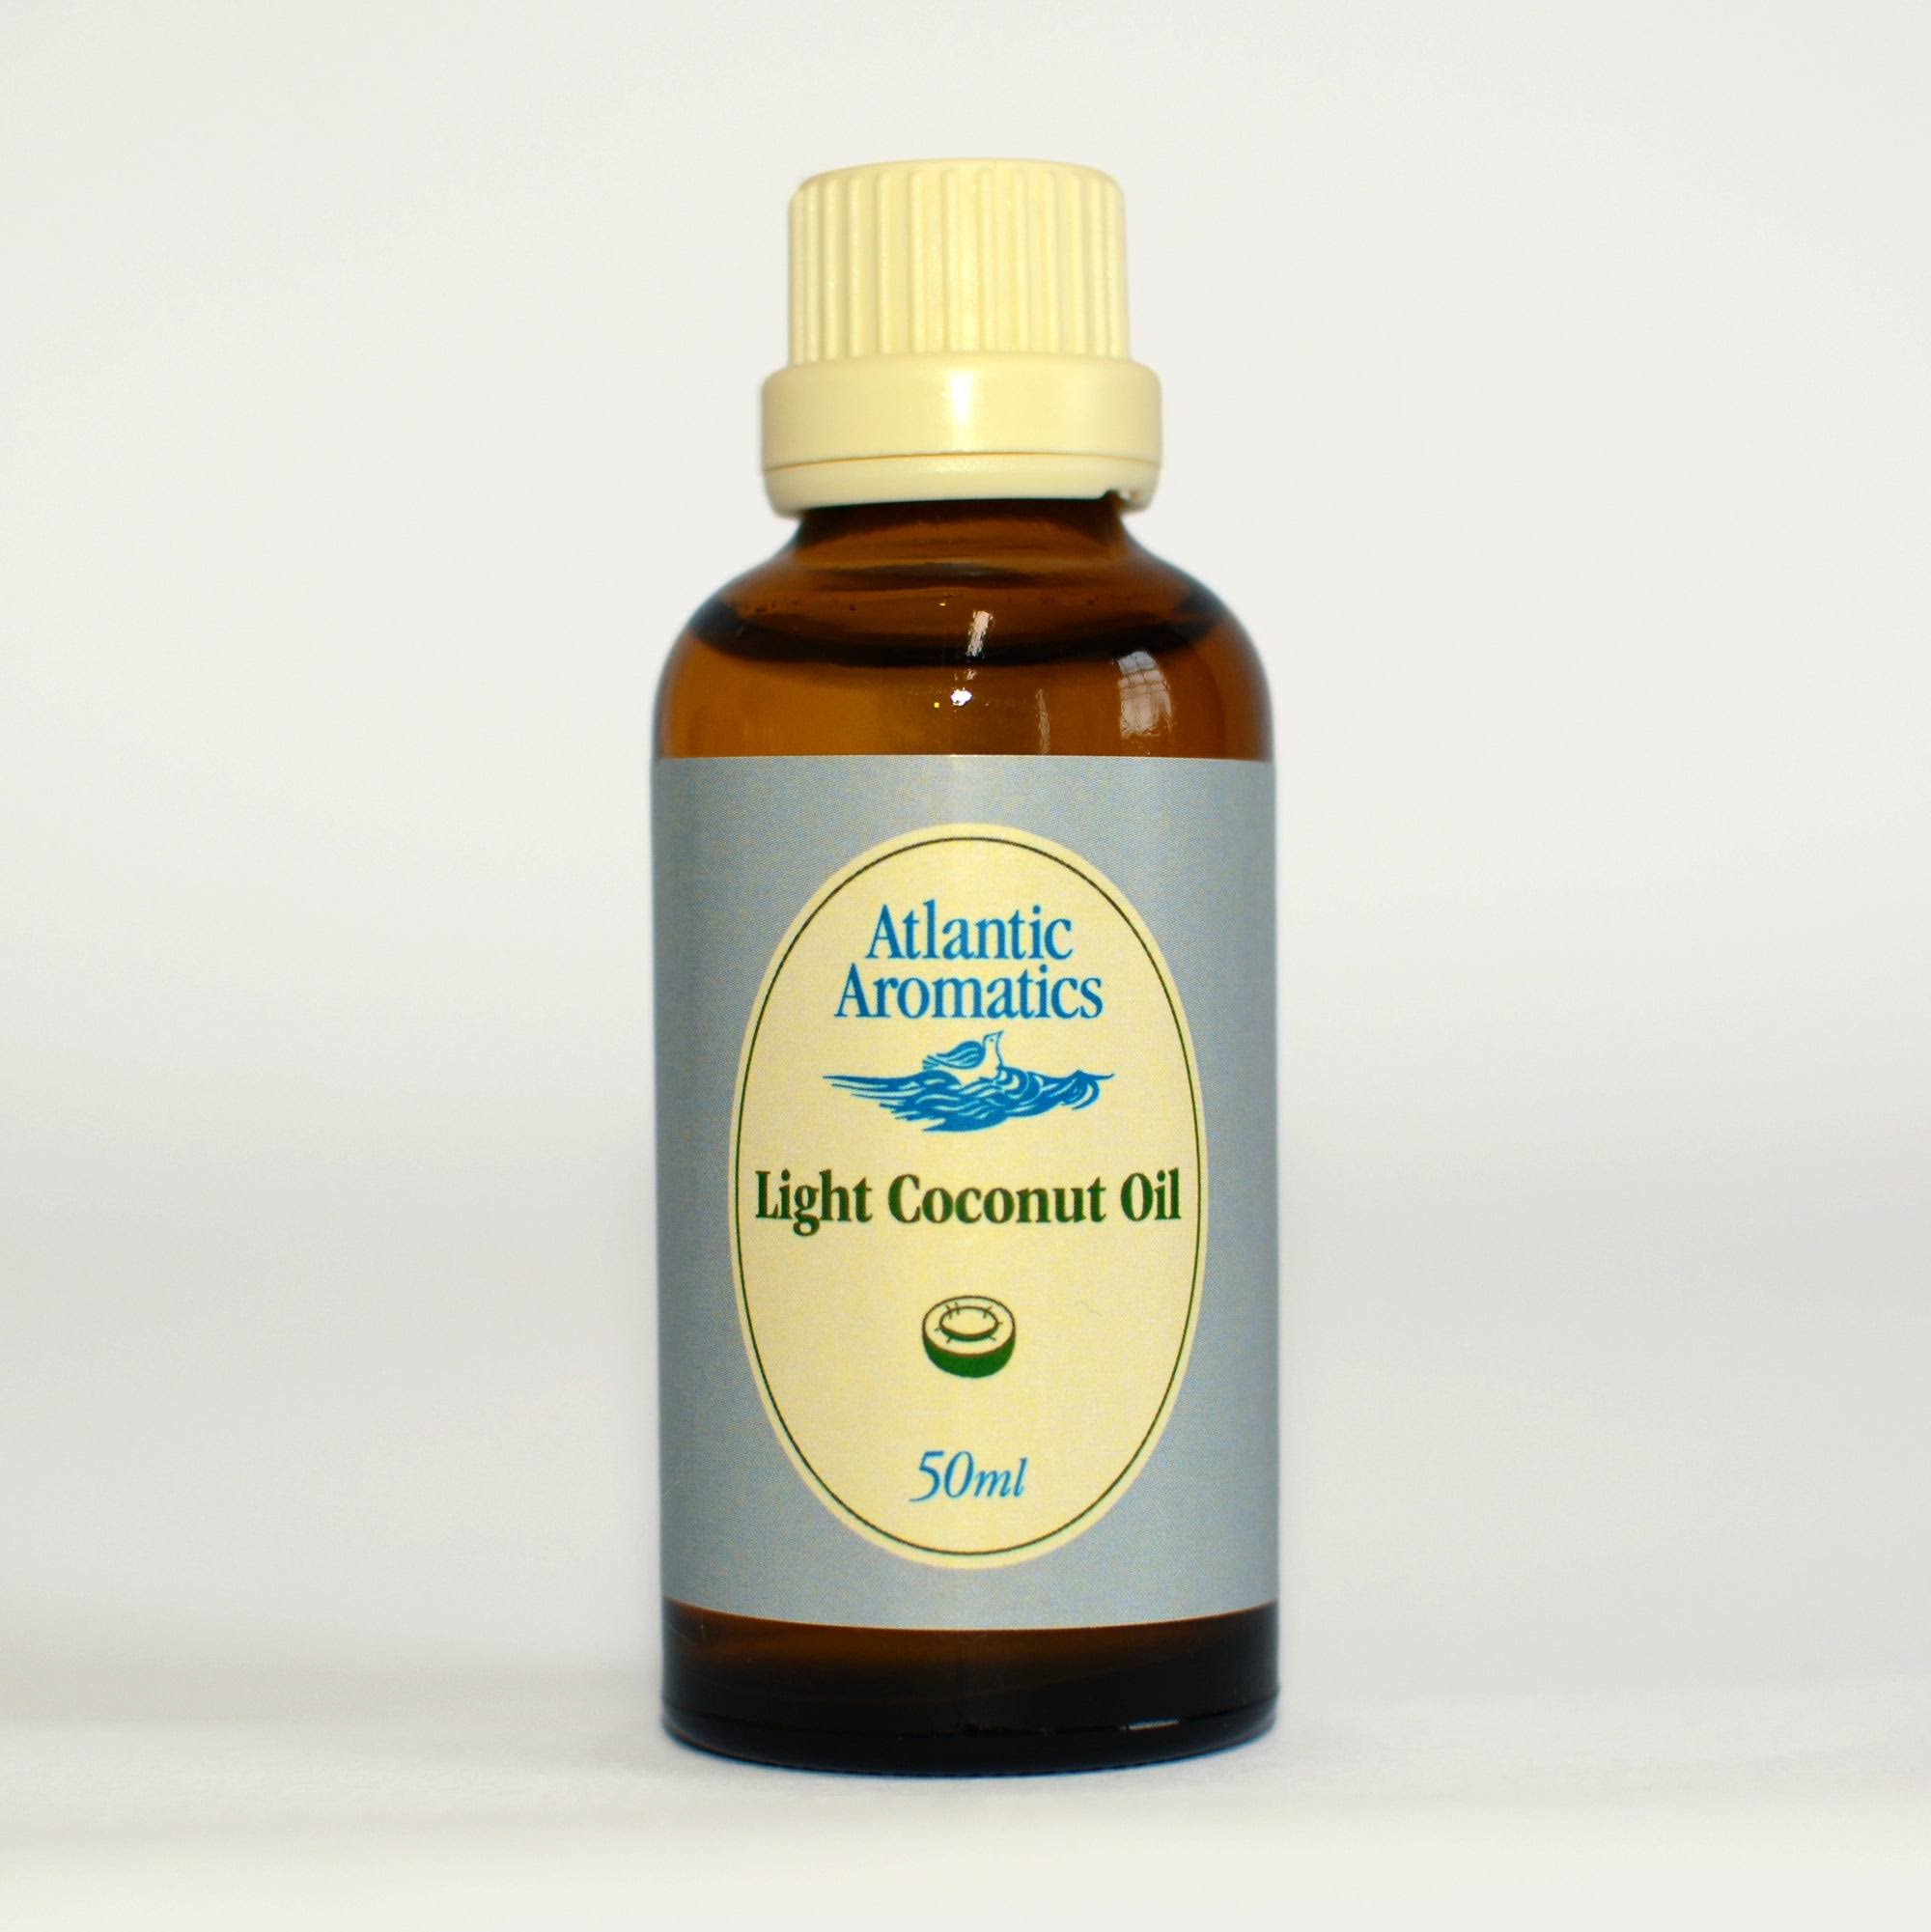 Atlantic Aromatics Light Coconut Oil - 50ml